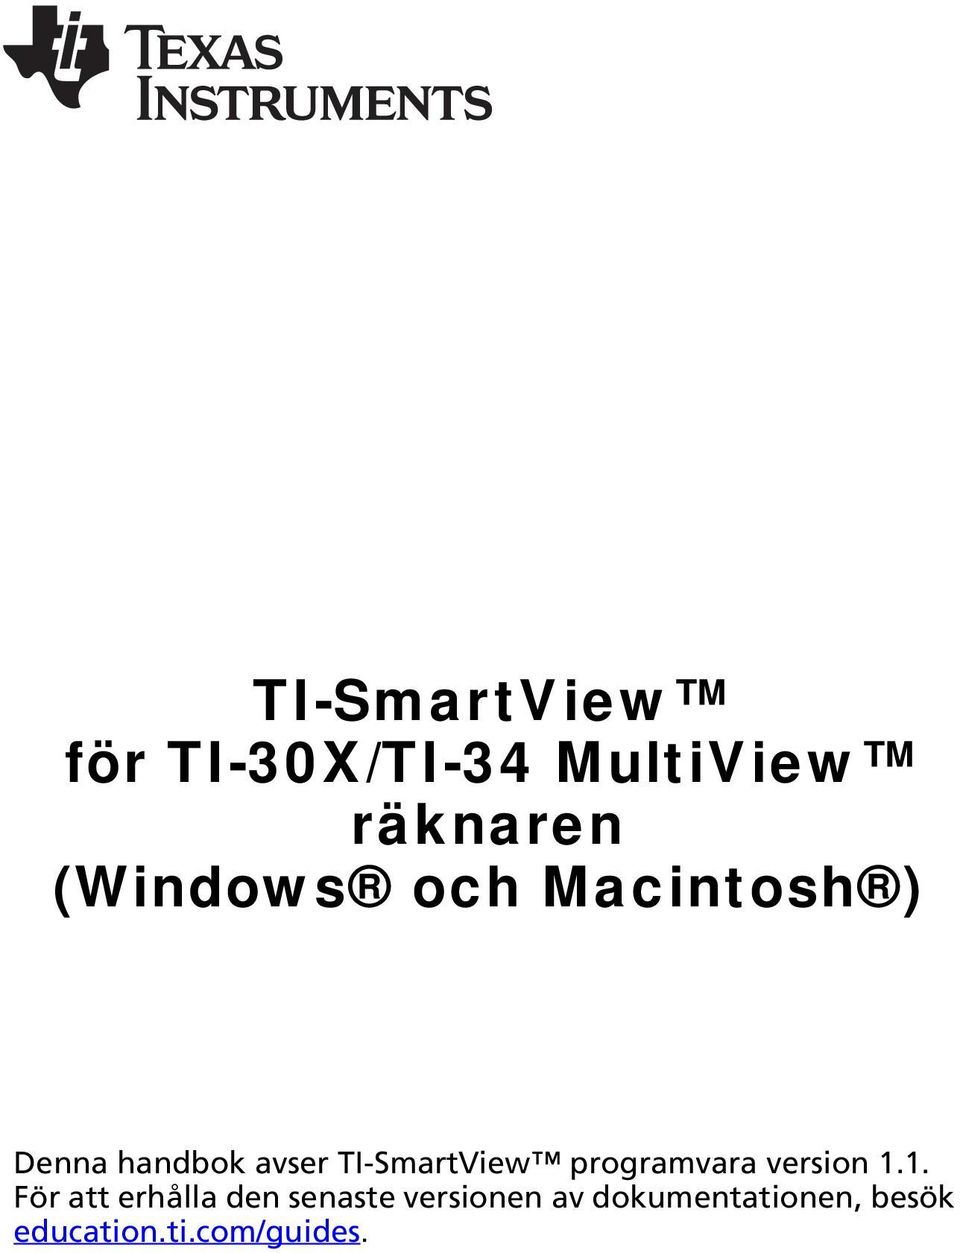 TI-SmartView programvara version 1.